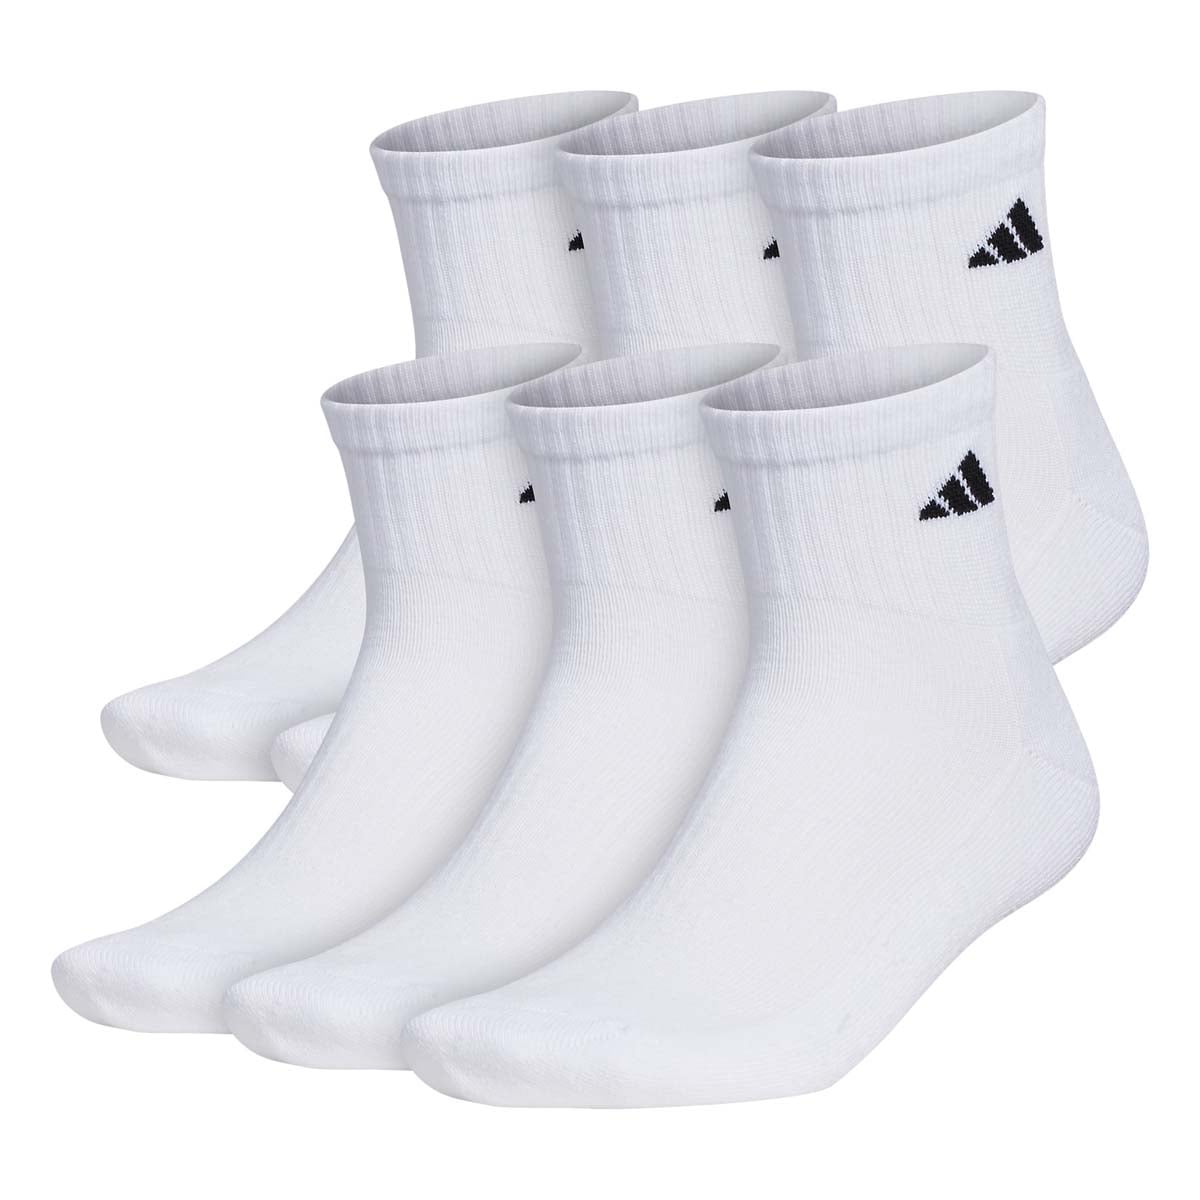 Adidas Mens Extended Size Cushioned Quarter Socks - Walmart.com